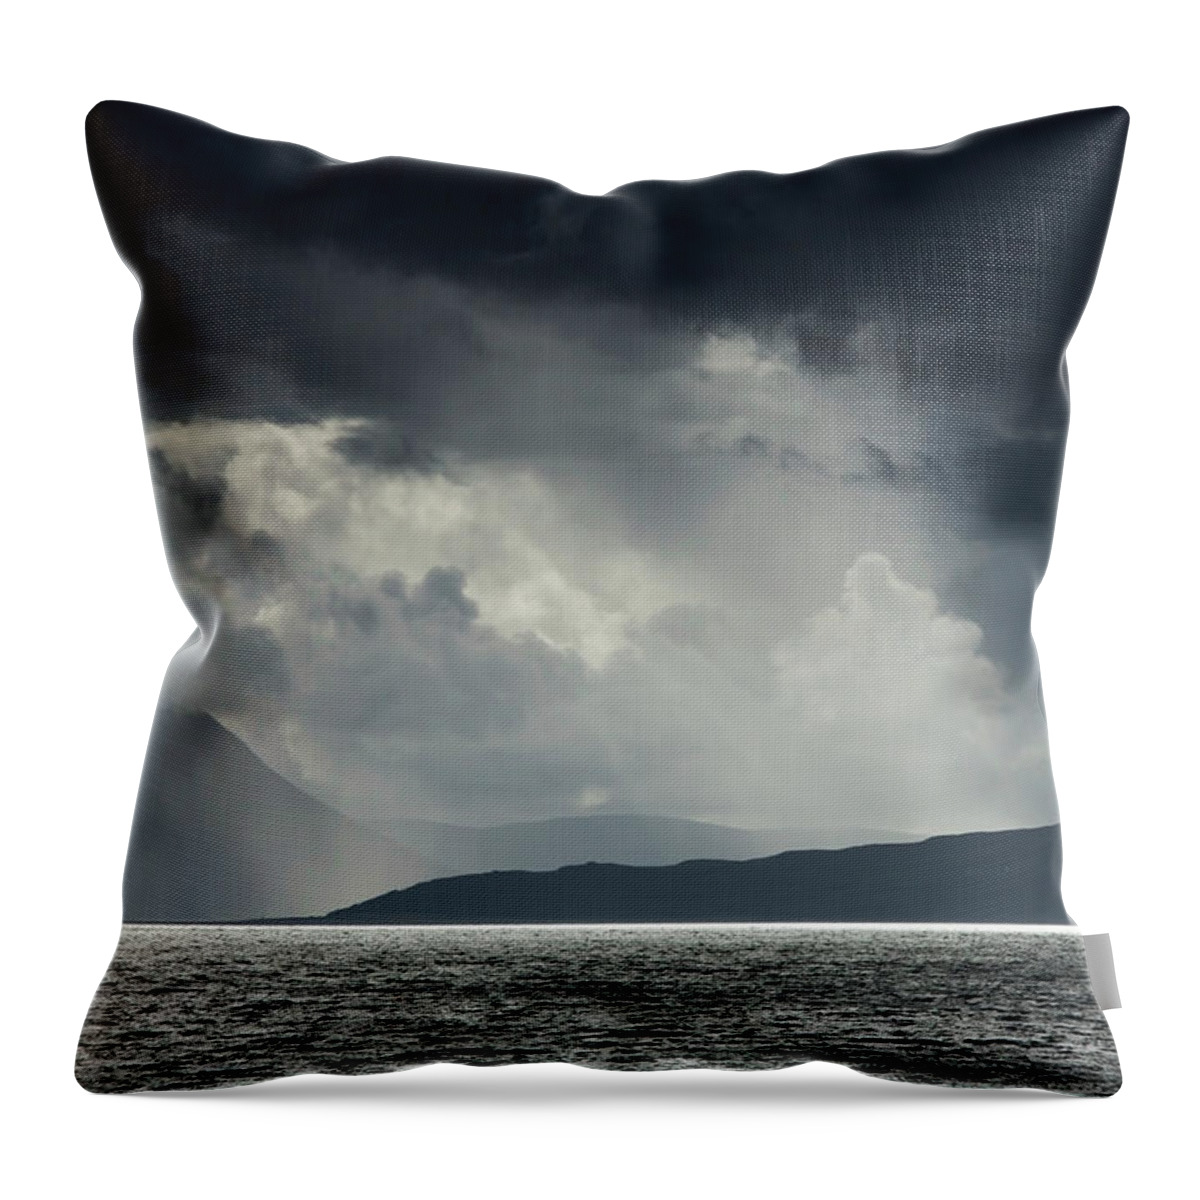 Scotland Throw Pillow featuring the photograph Sunlight Shining Through Dark Storm by John Short / Design Pics